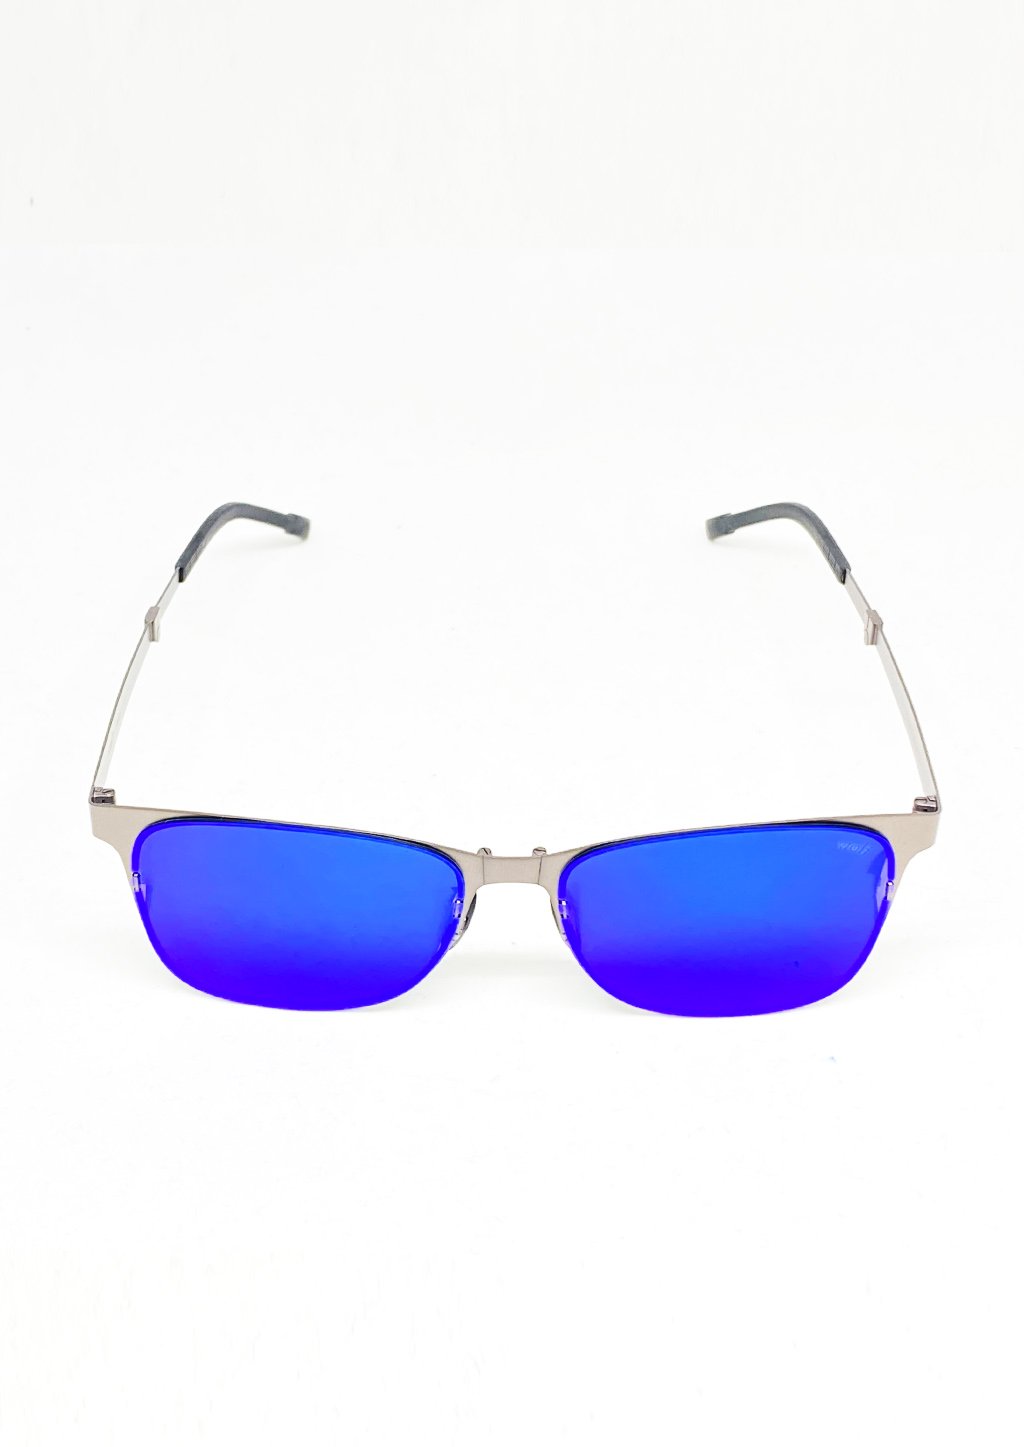 Rover - Foldable Wayfarer Sunglasses